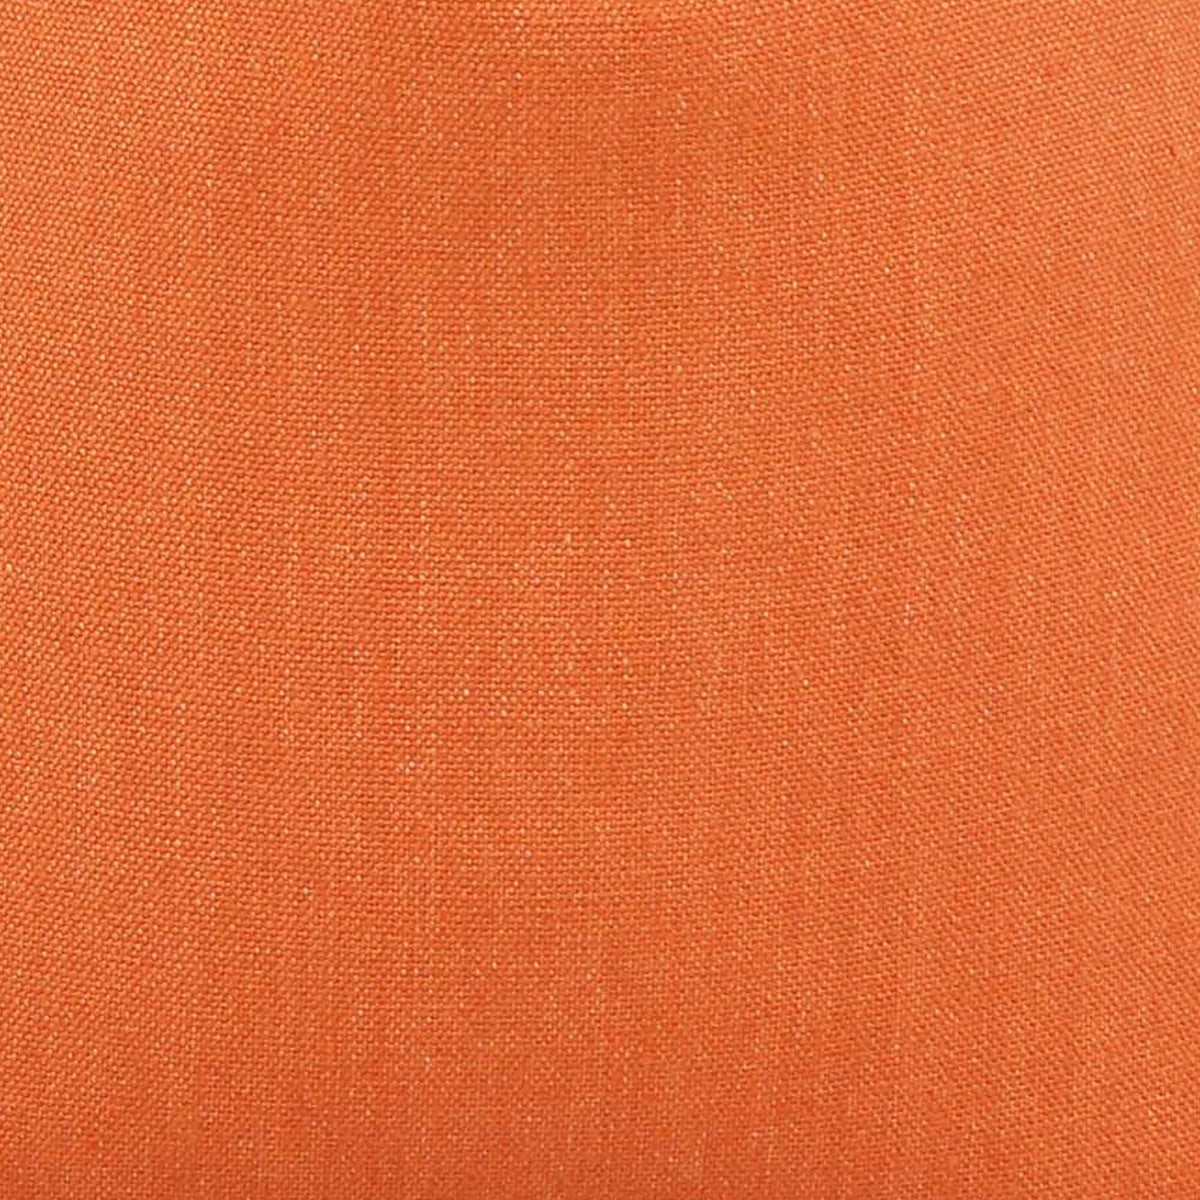 Tay Pumpkin / 4x4 inch Fabric Swatch